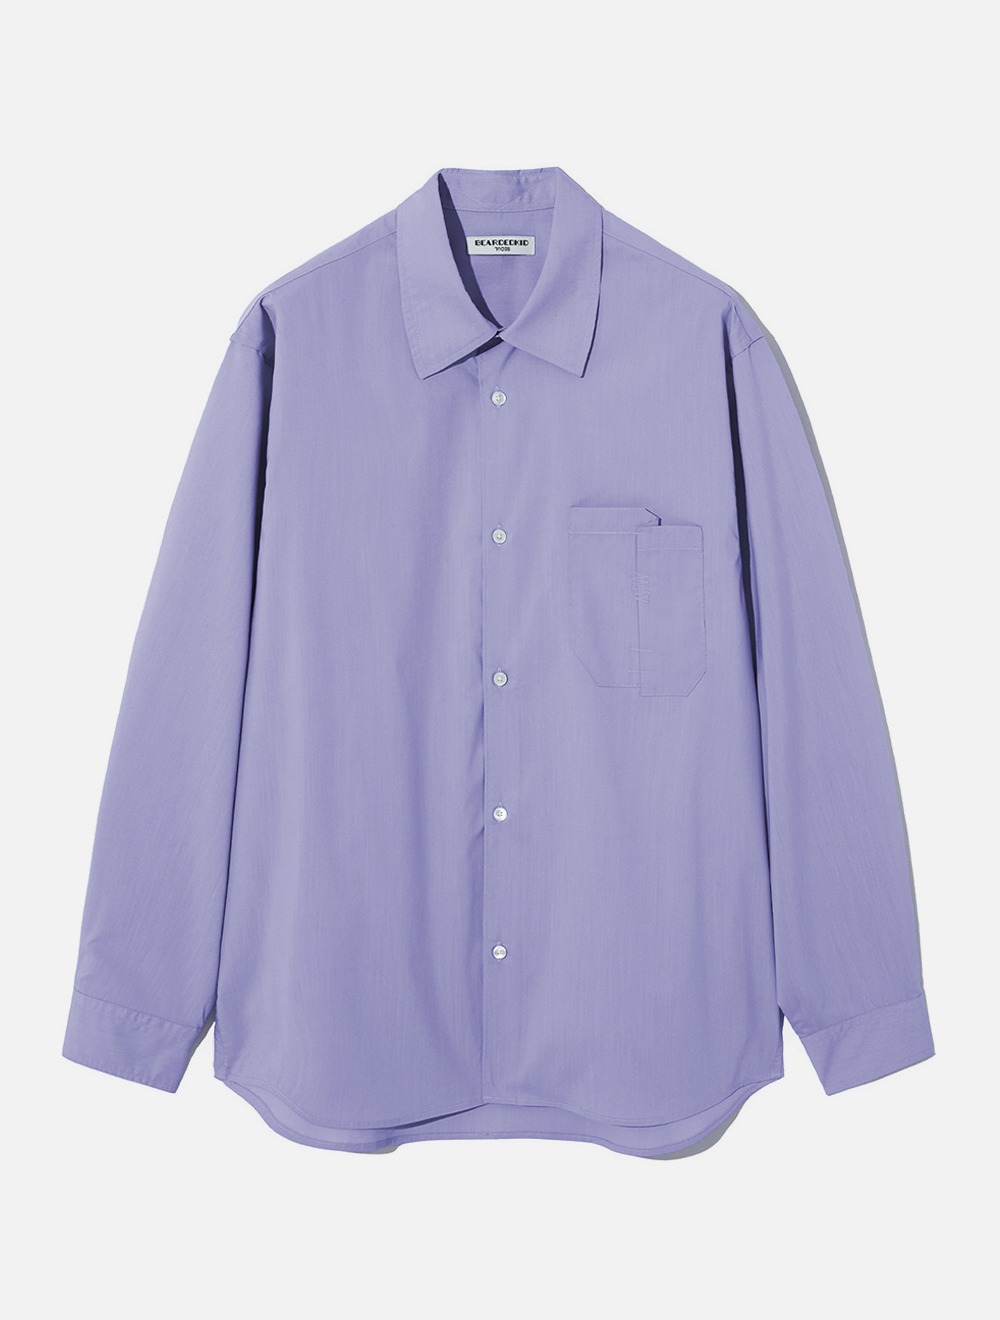 Silhouette Shirt_Lavender